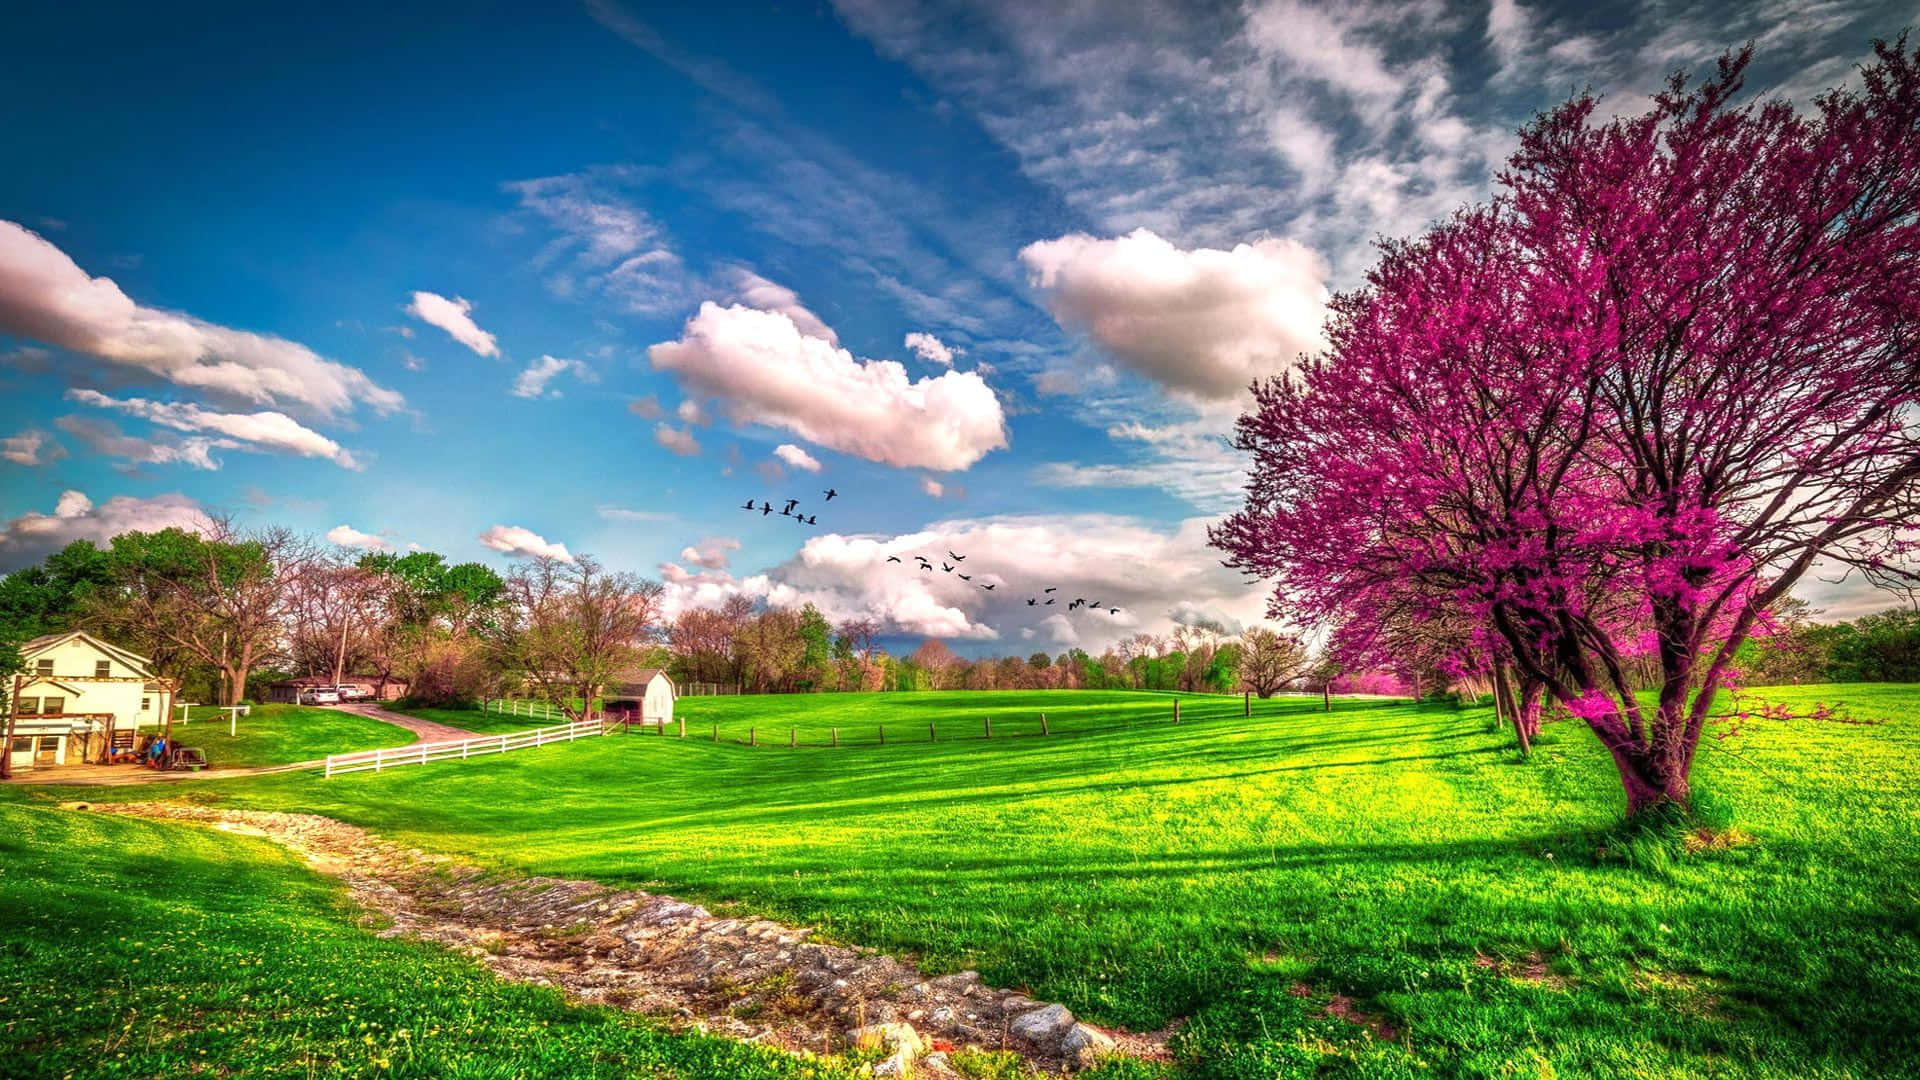 A beautiful Natural Scene in Spring